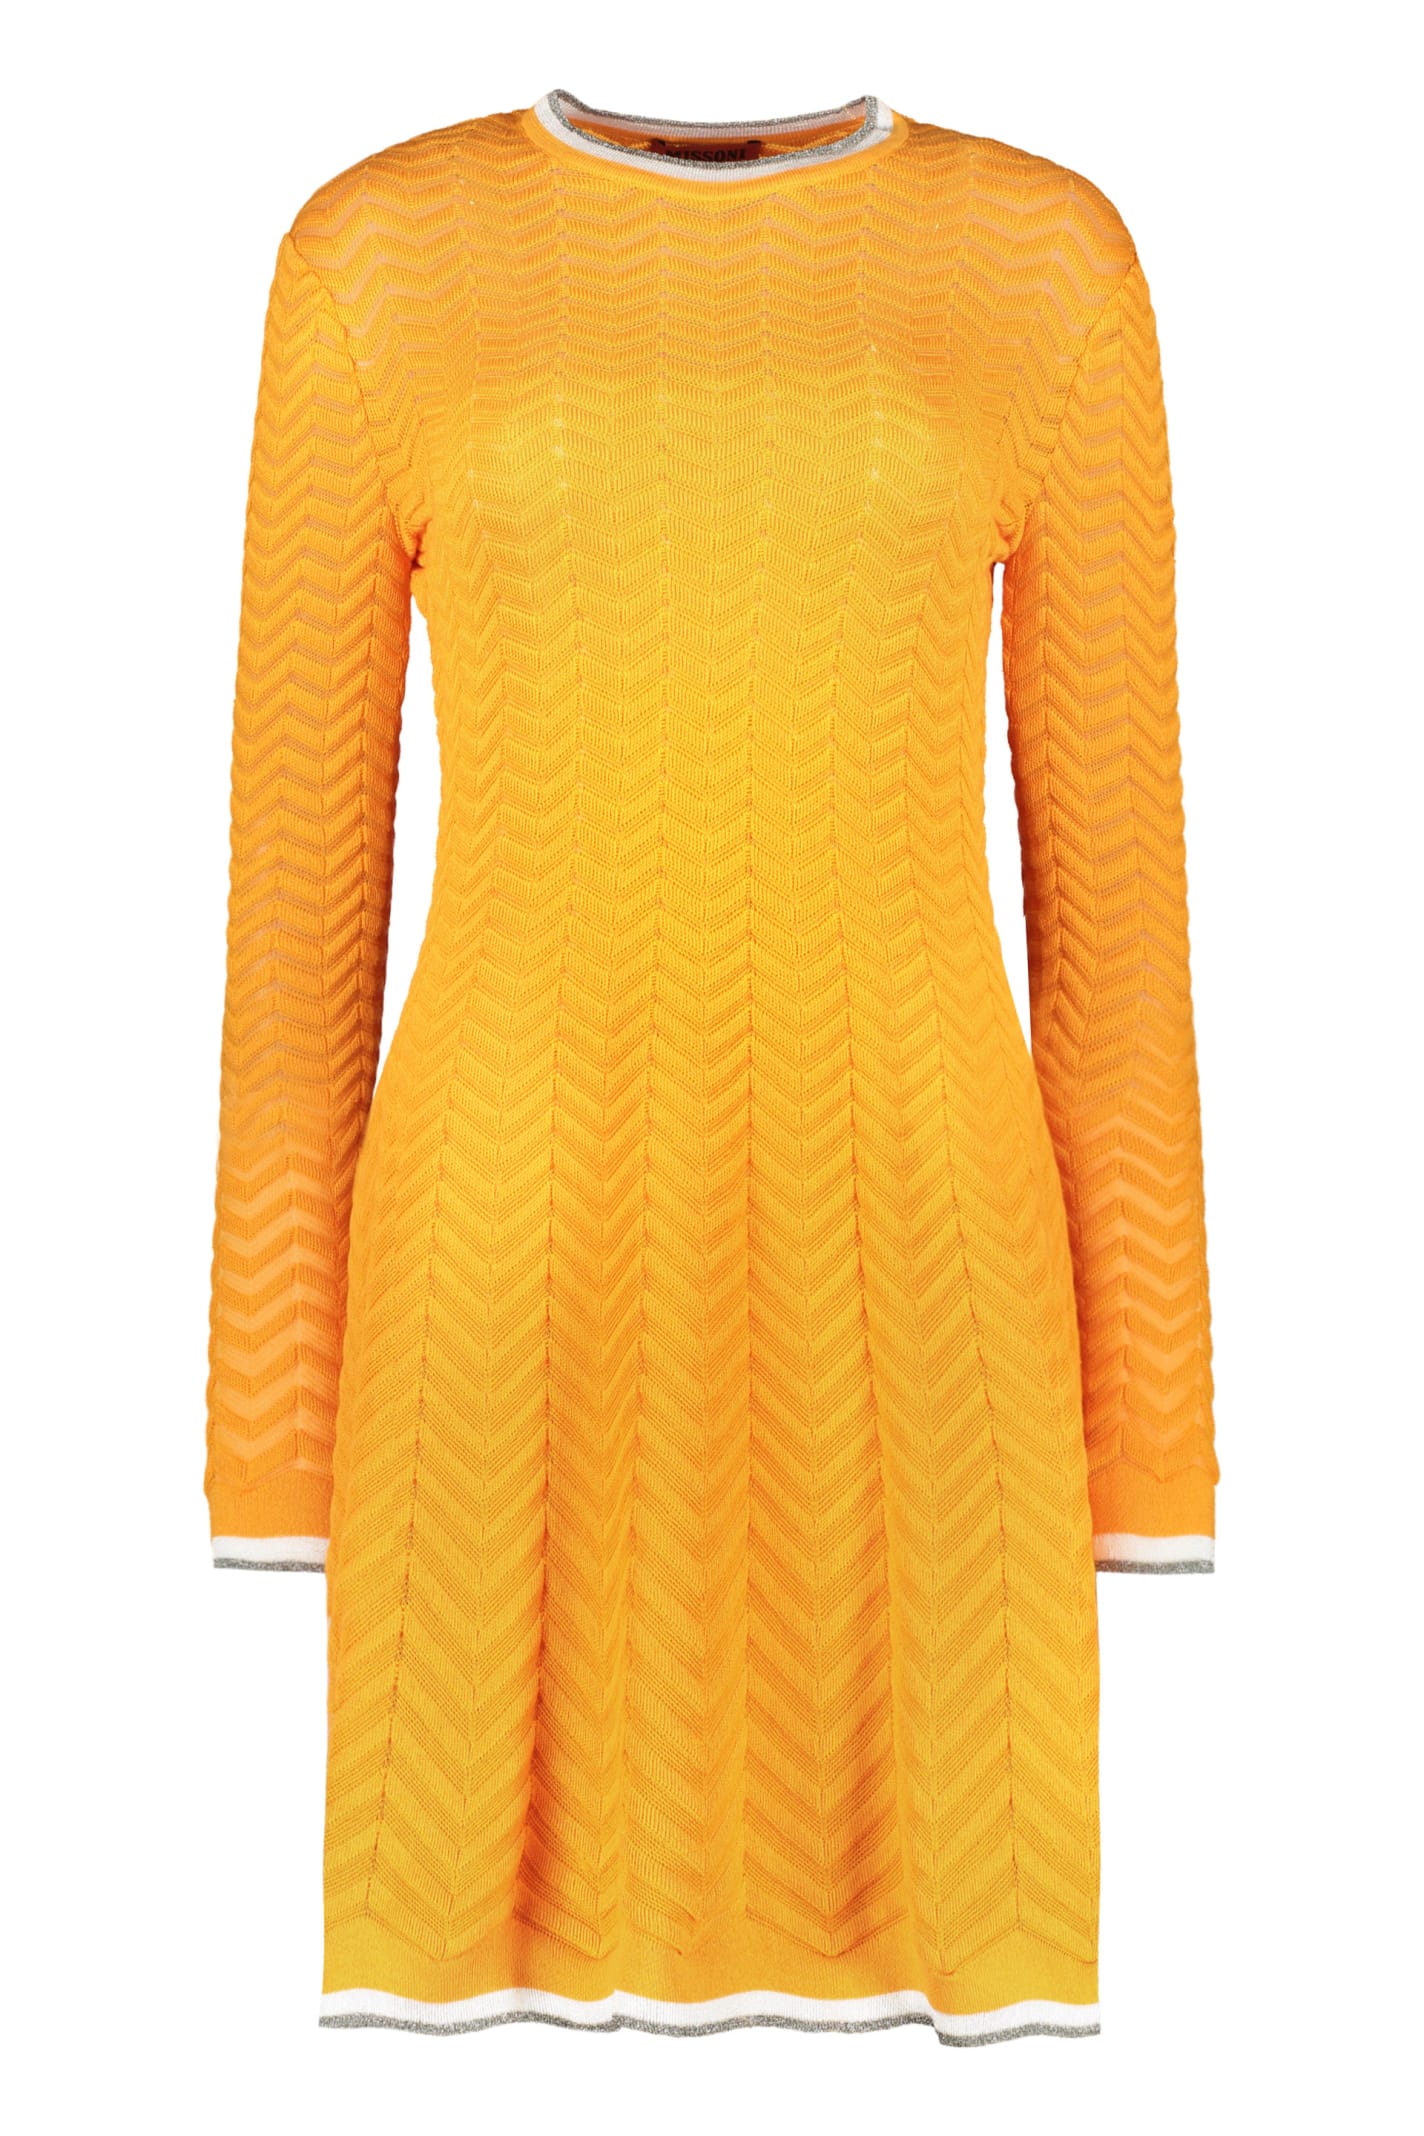 Missoni Knitted Dress In Orange